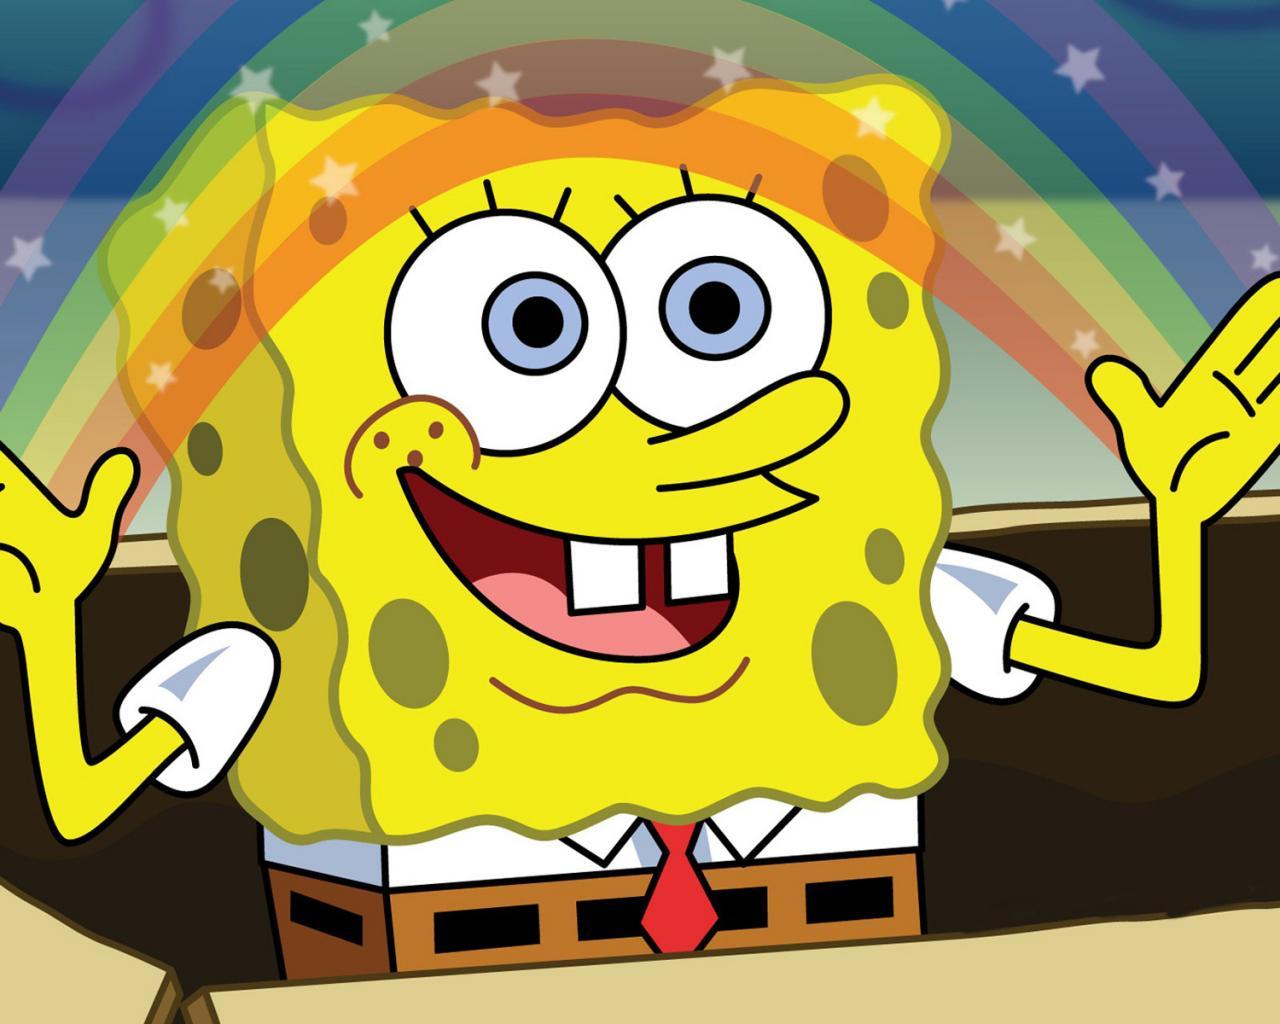 100+] Spongebob Meme Wallpapers | Wallpapers.com